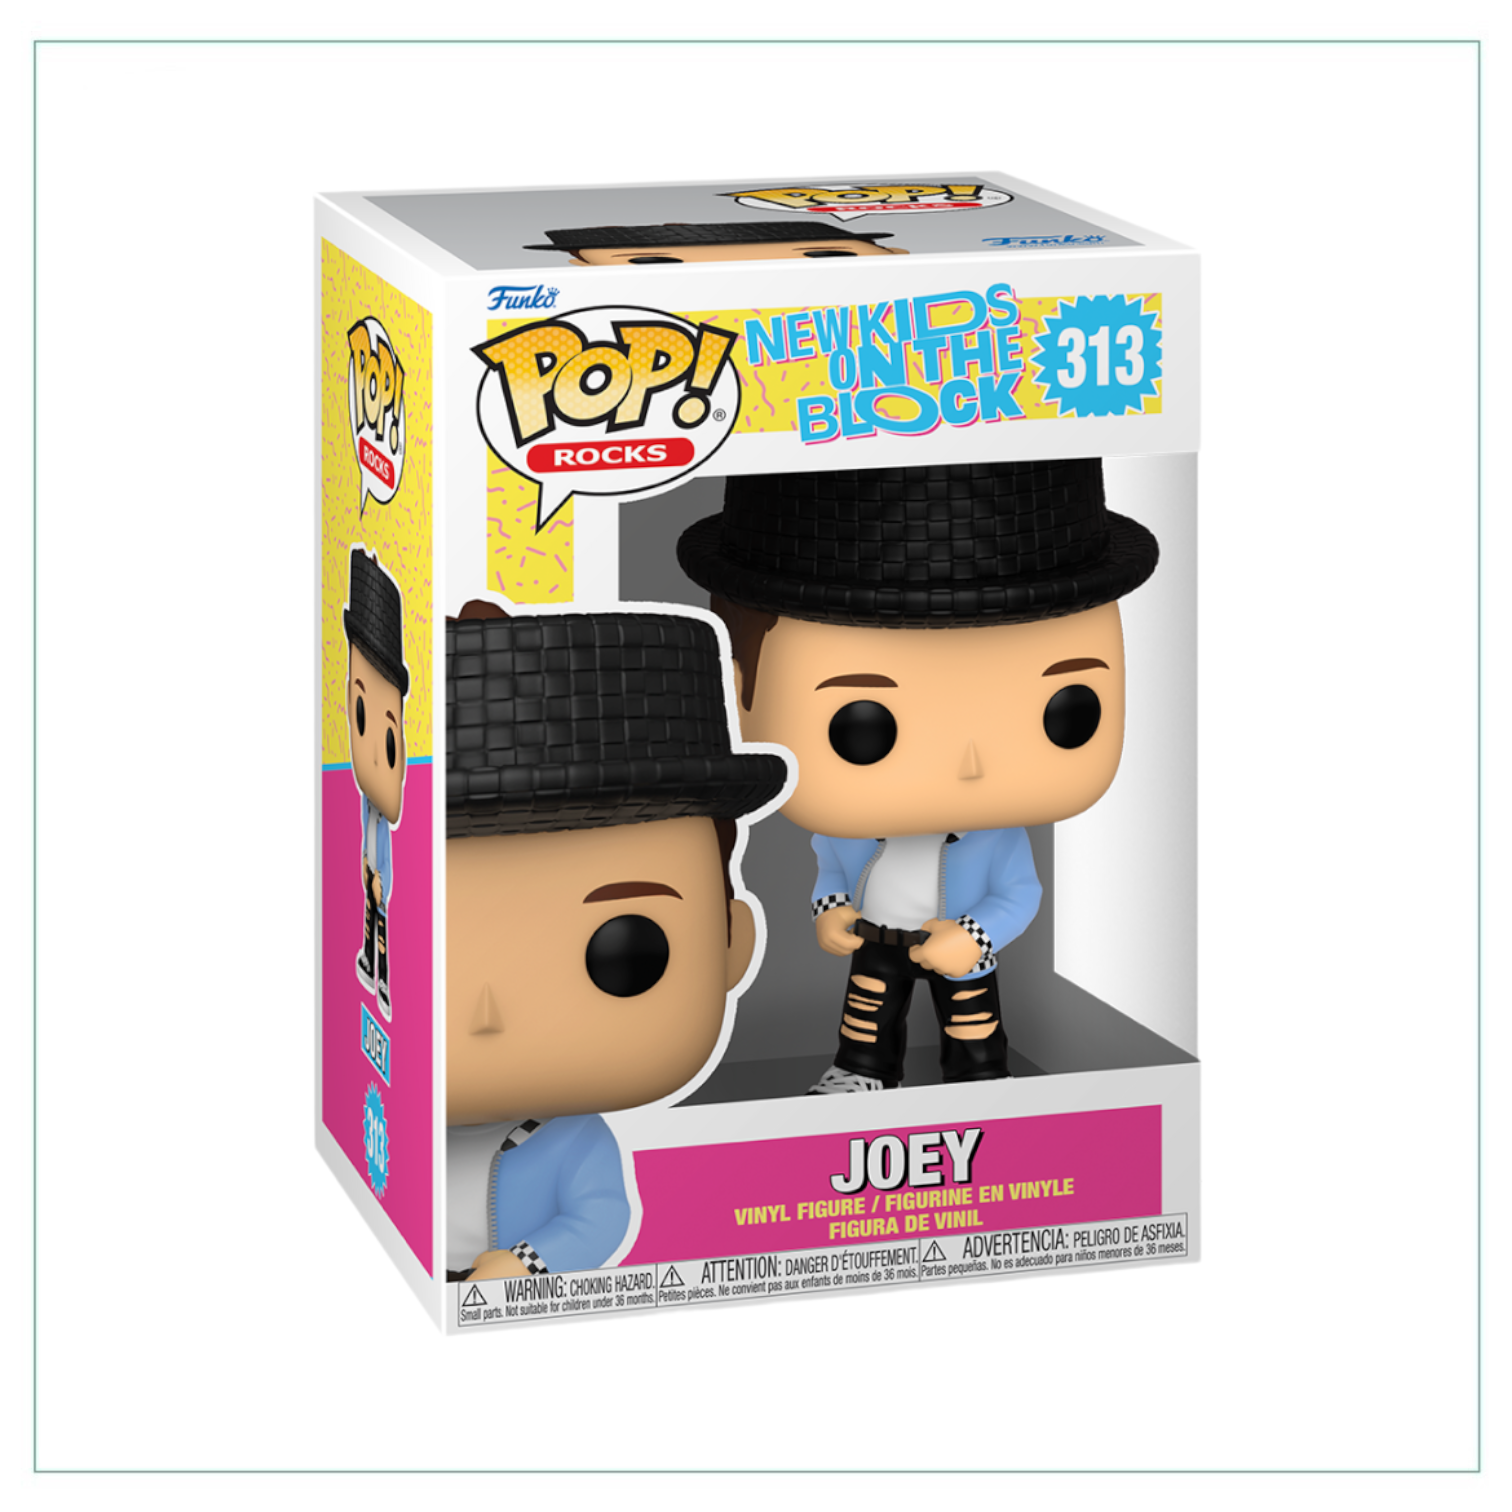 Joey #313 Funko Pop! New Kids on the Block